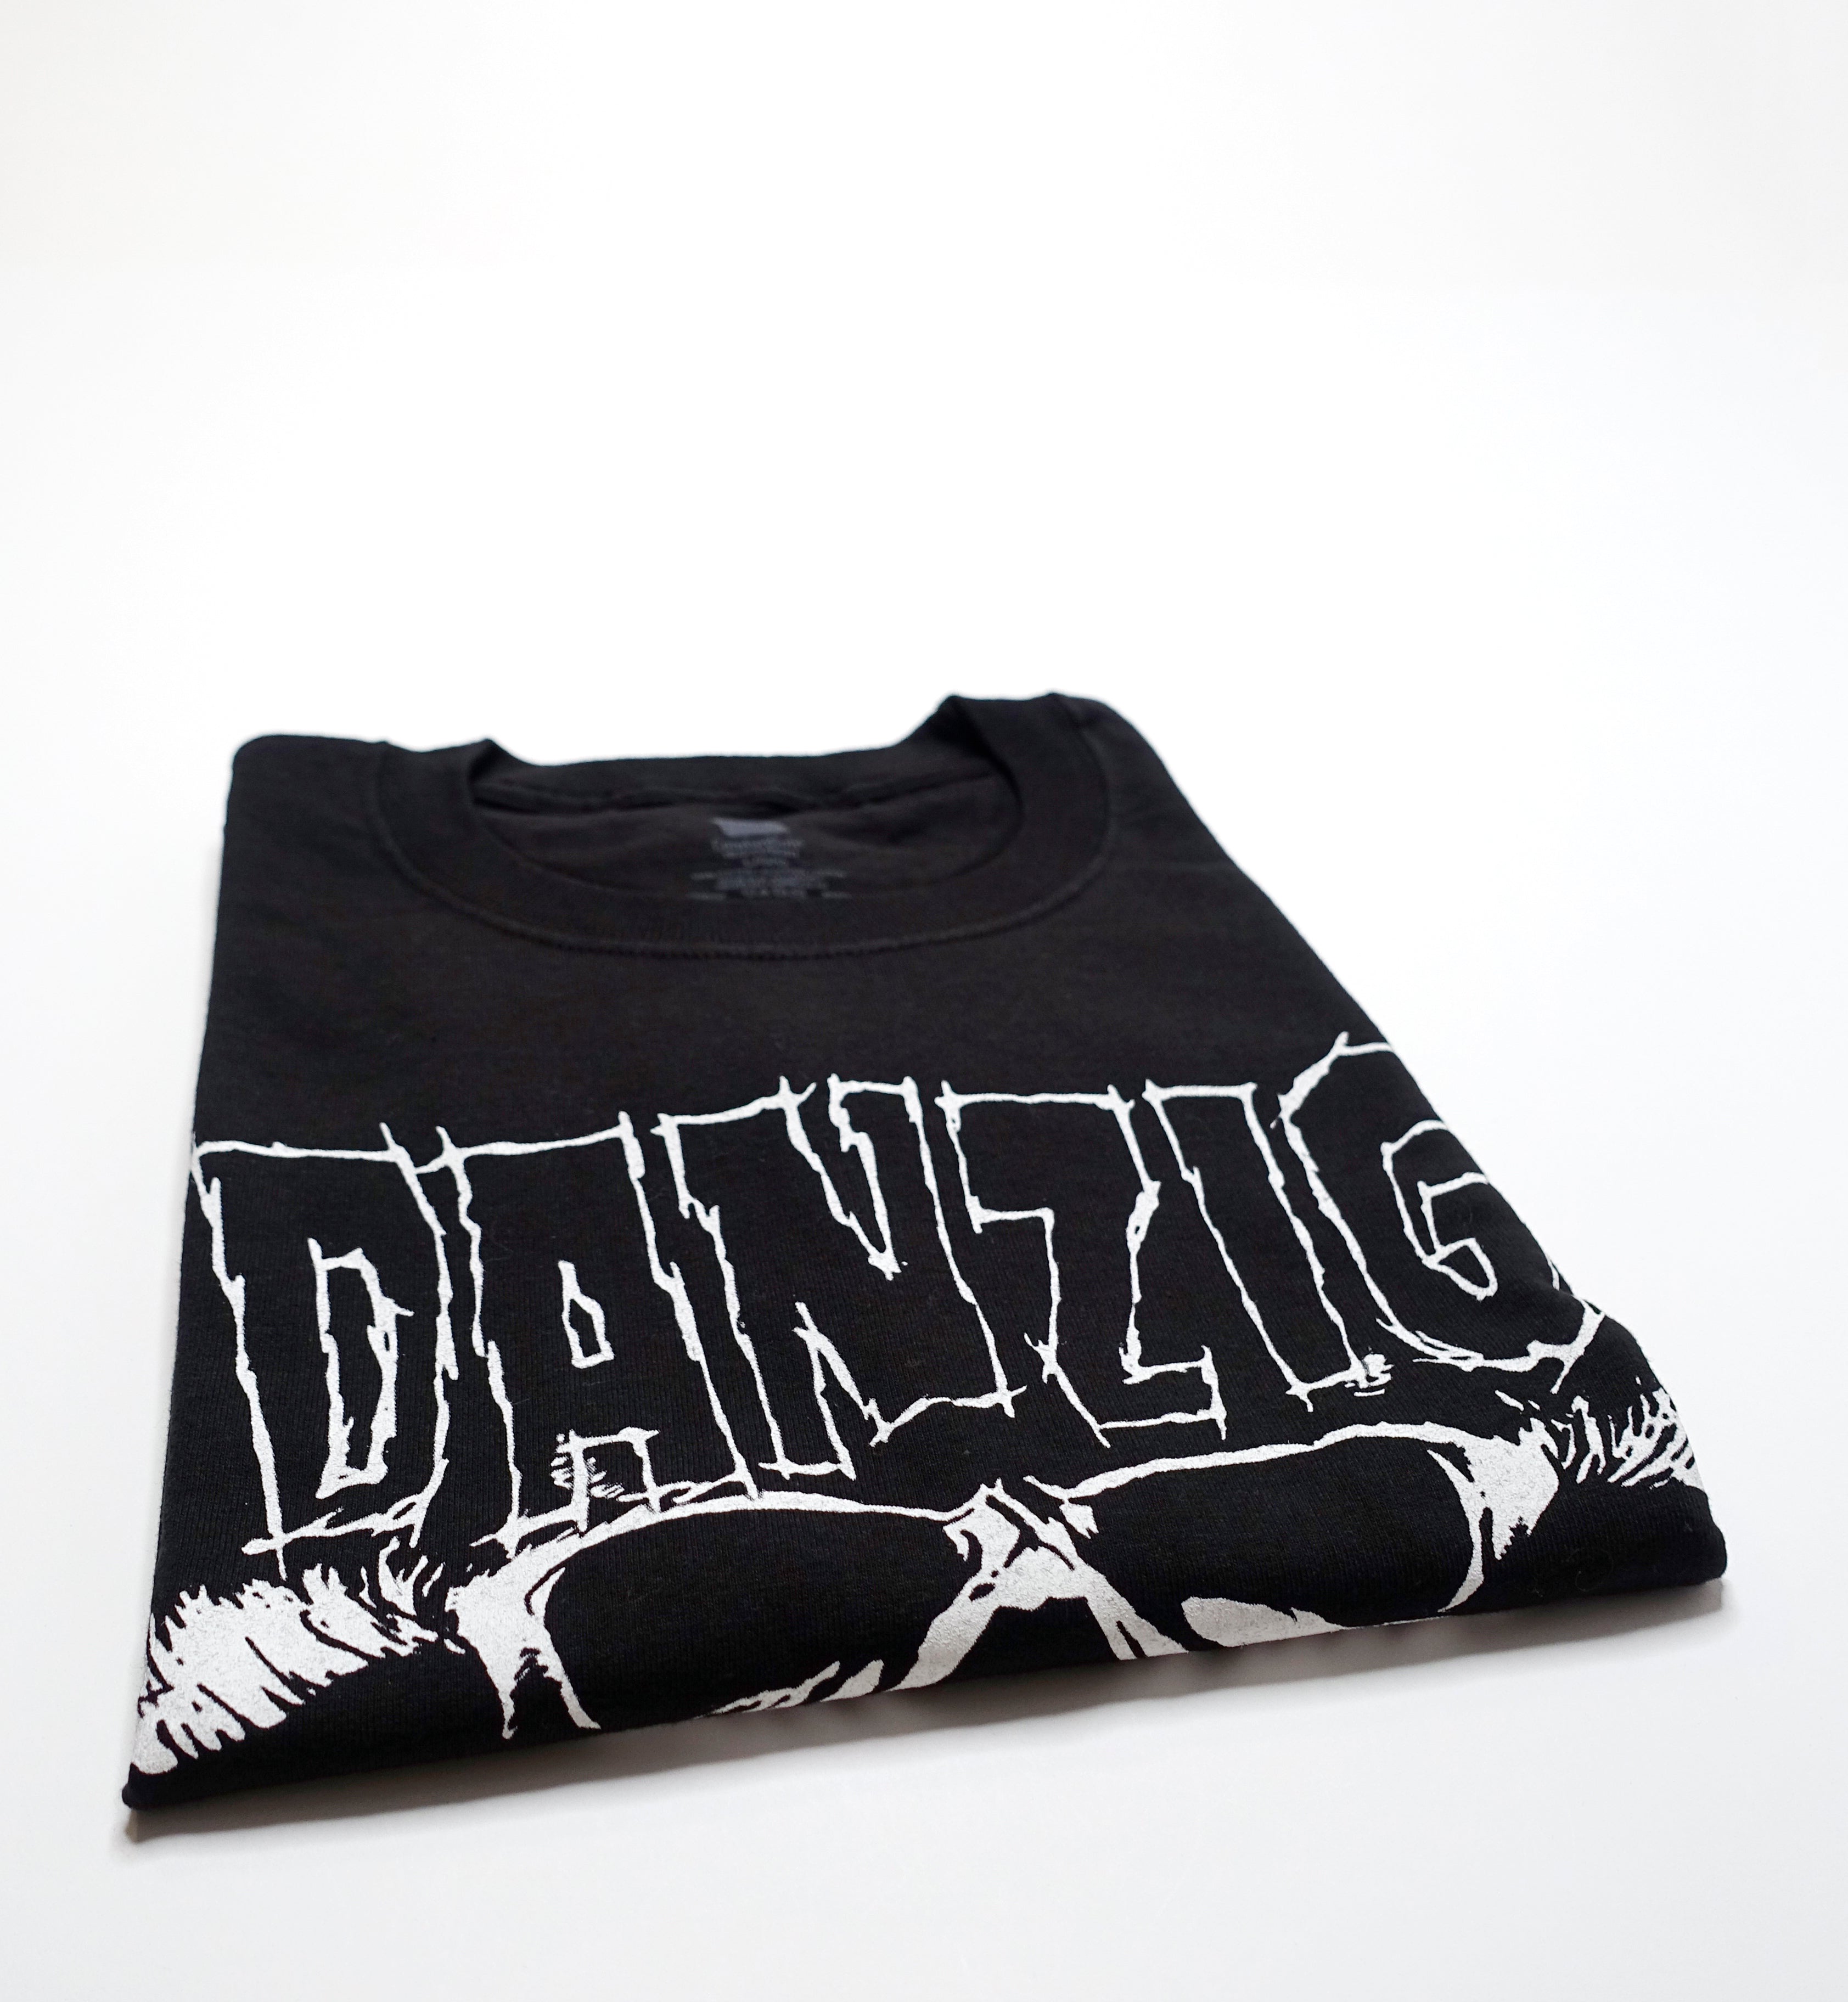 Danzig -  Danzig Legacy 2009 Tour Shirt Size Large